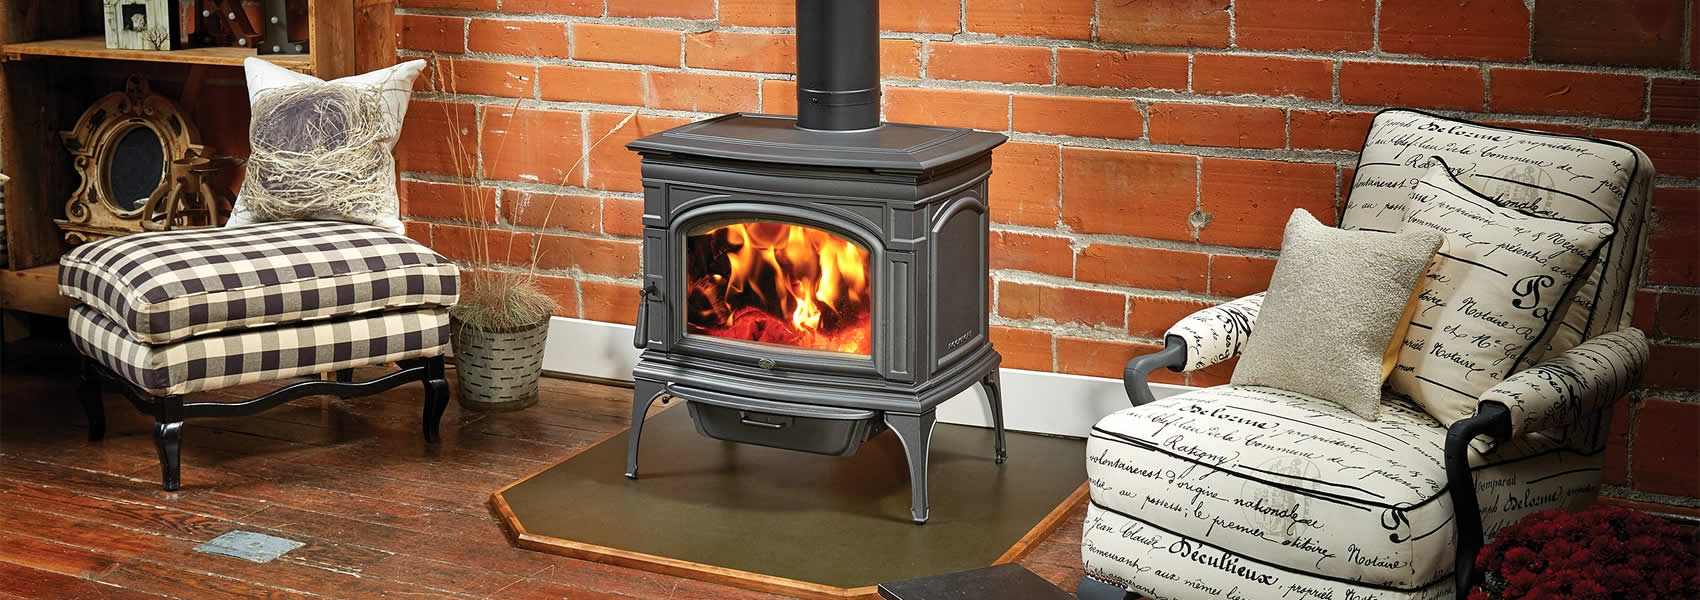 lopi cast iron wood stove